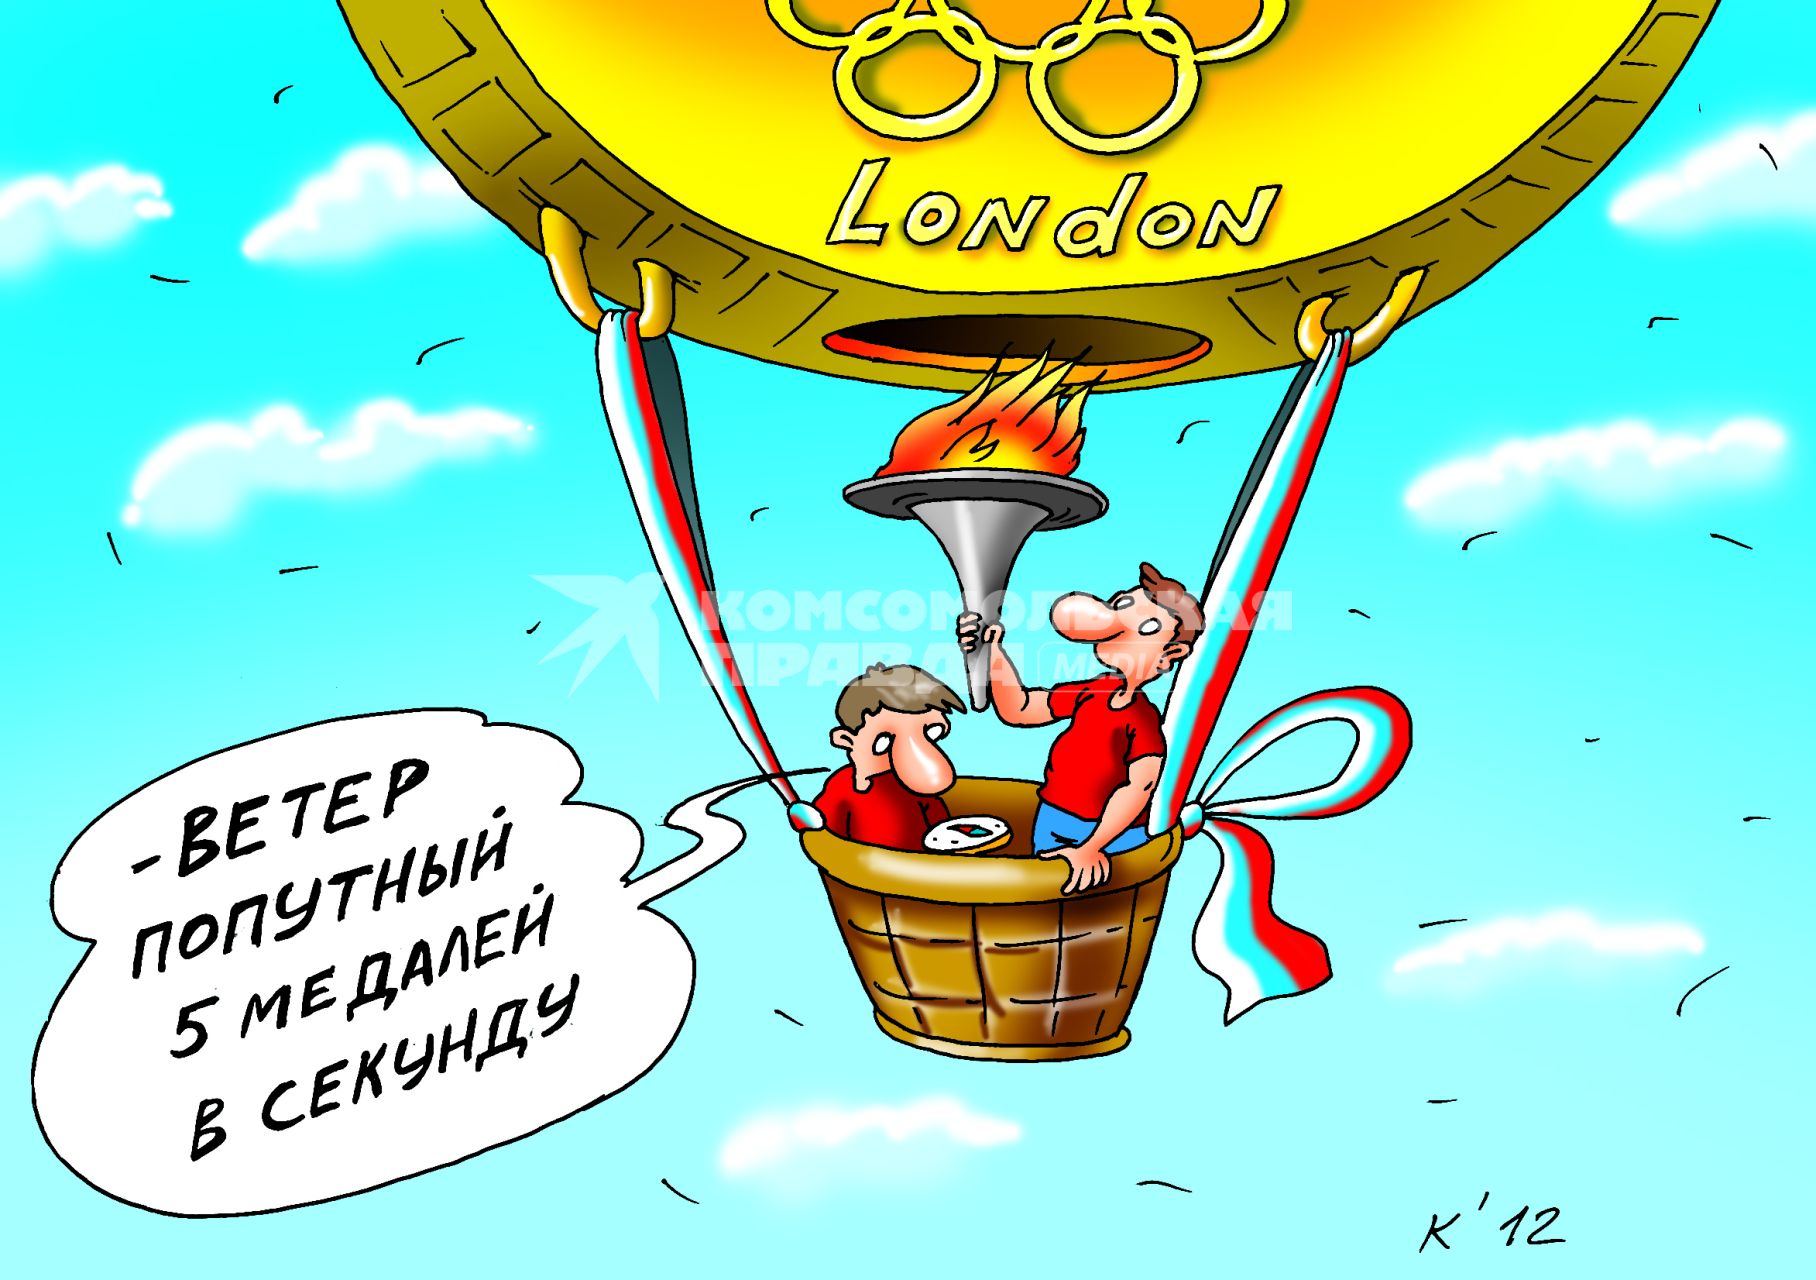 Карикатура на тему `Олимпийские игры`.